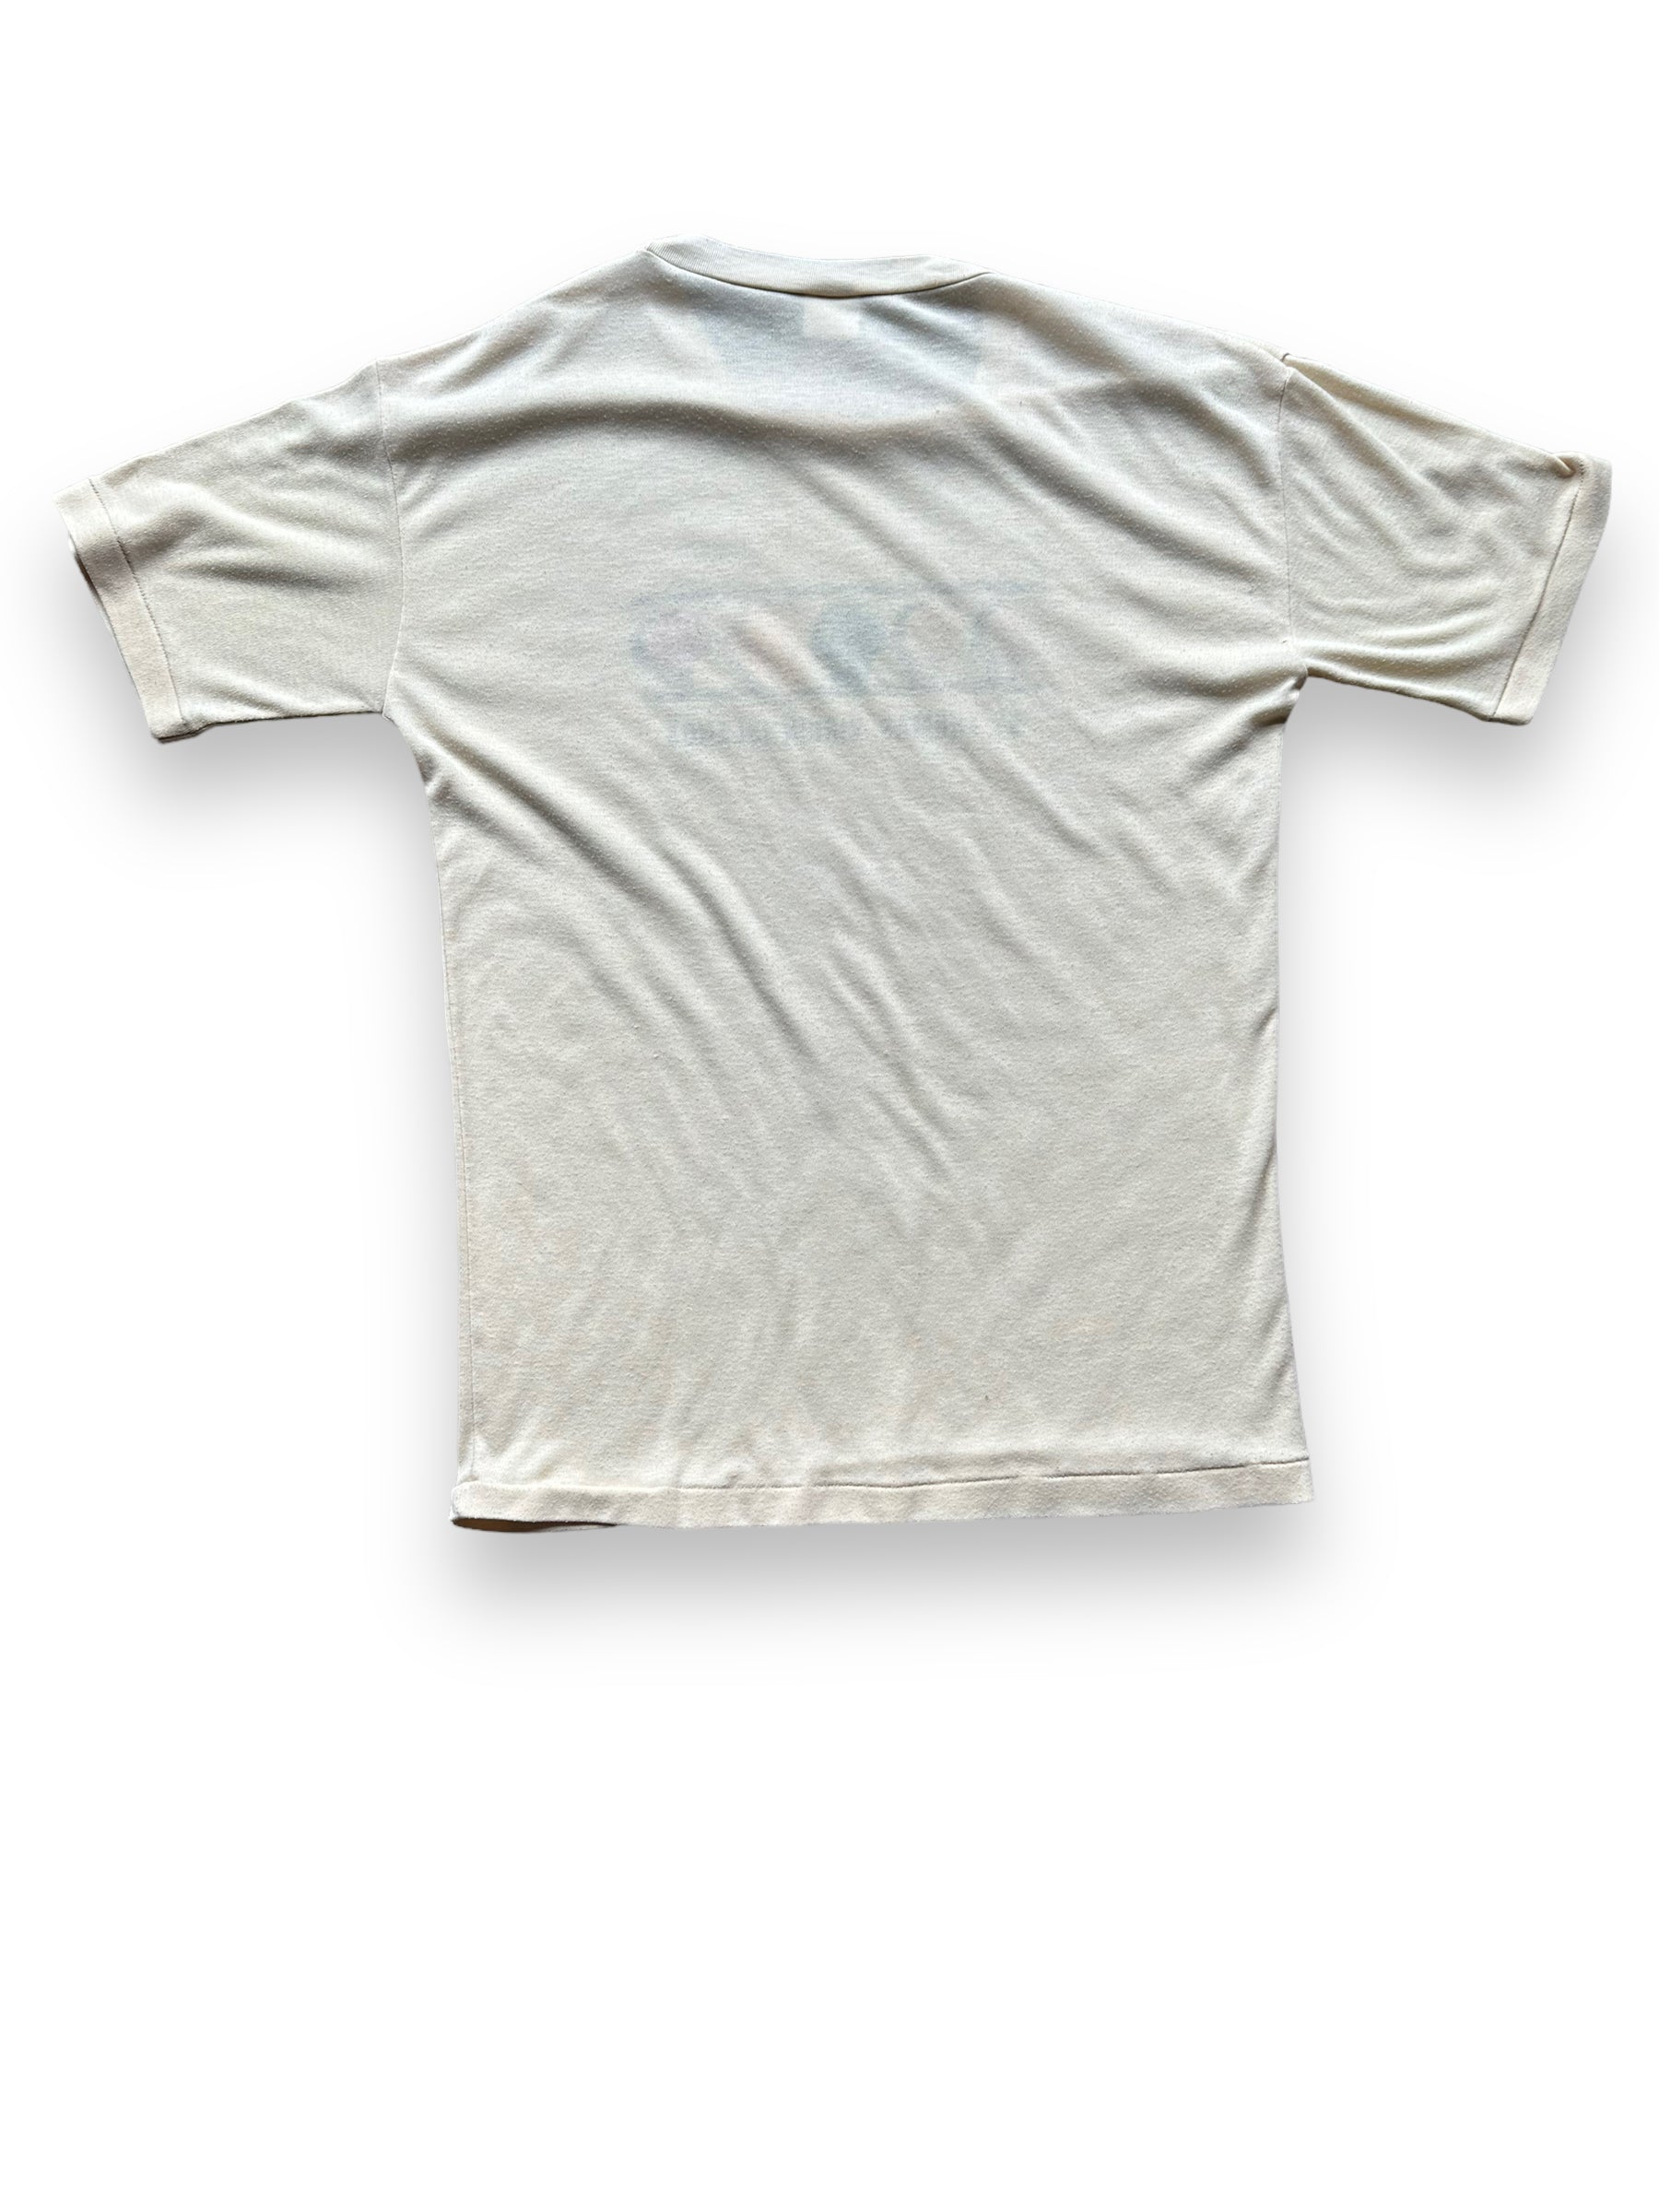 Back shot of Vintage Virgin Islands Tee SZ S | Vintage T-Shirts Seattle | Barn Owl Vintage Tees Seattle